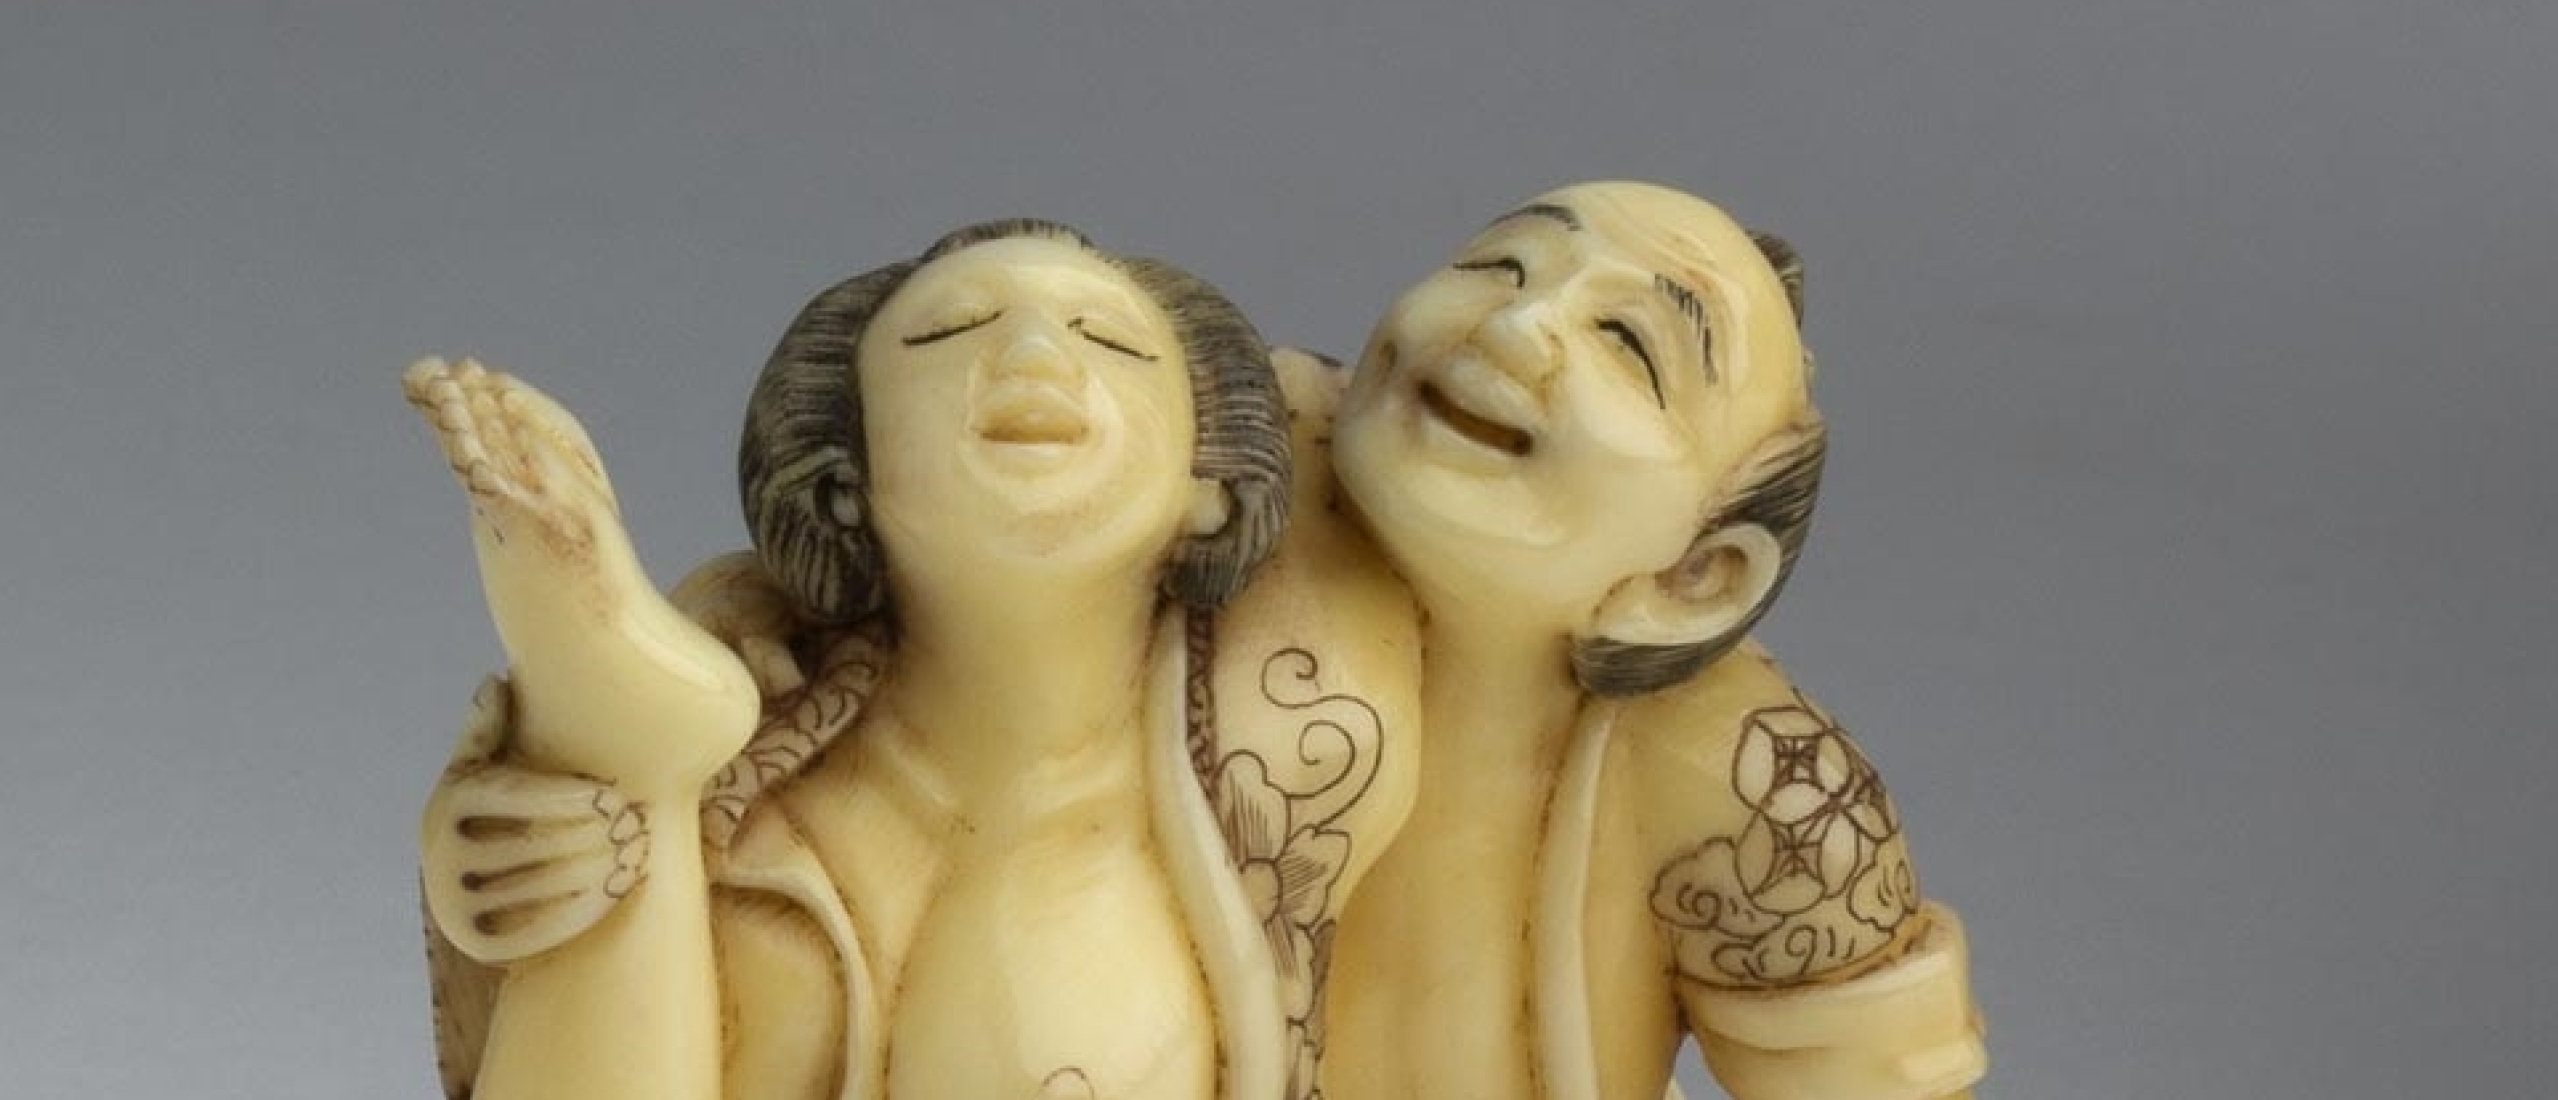 Sculptures From the Floating World: The Shunga Netsuke